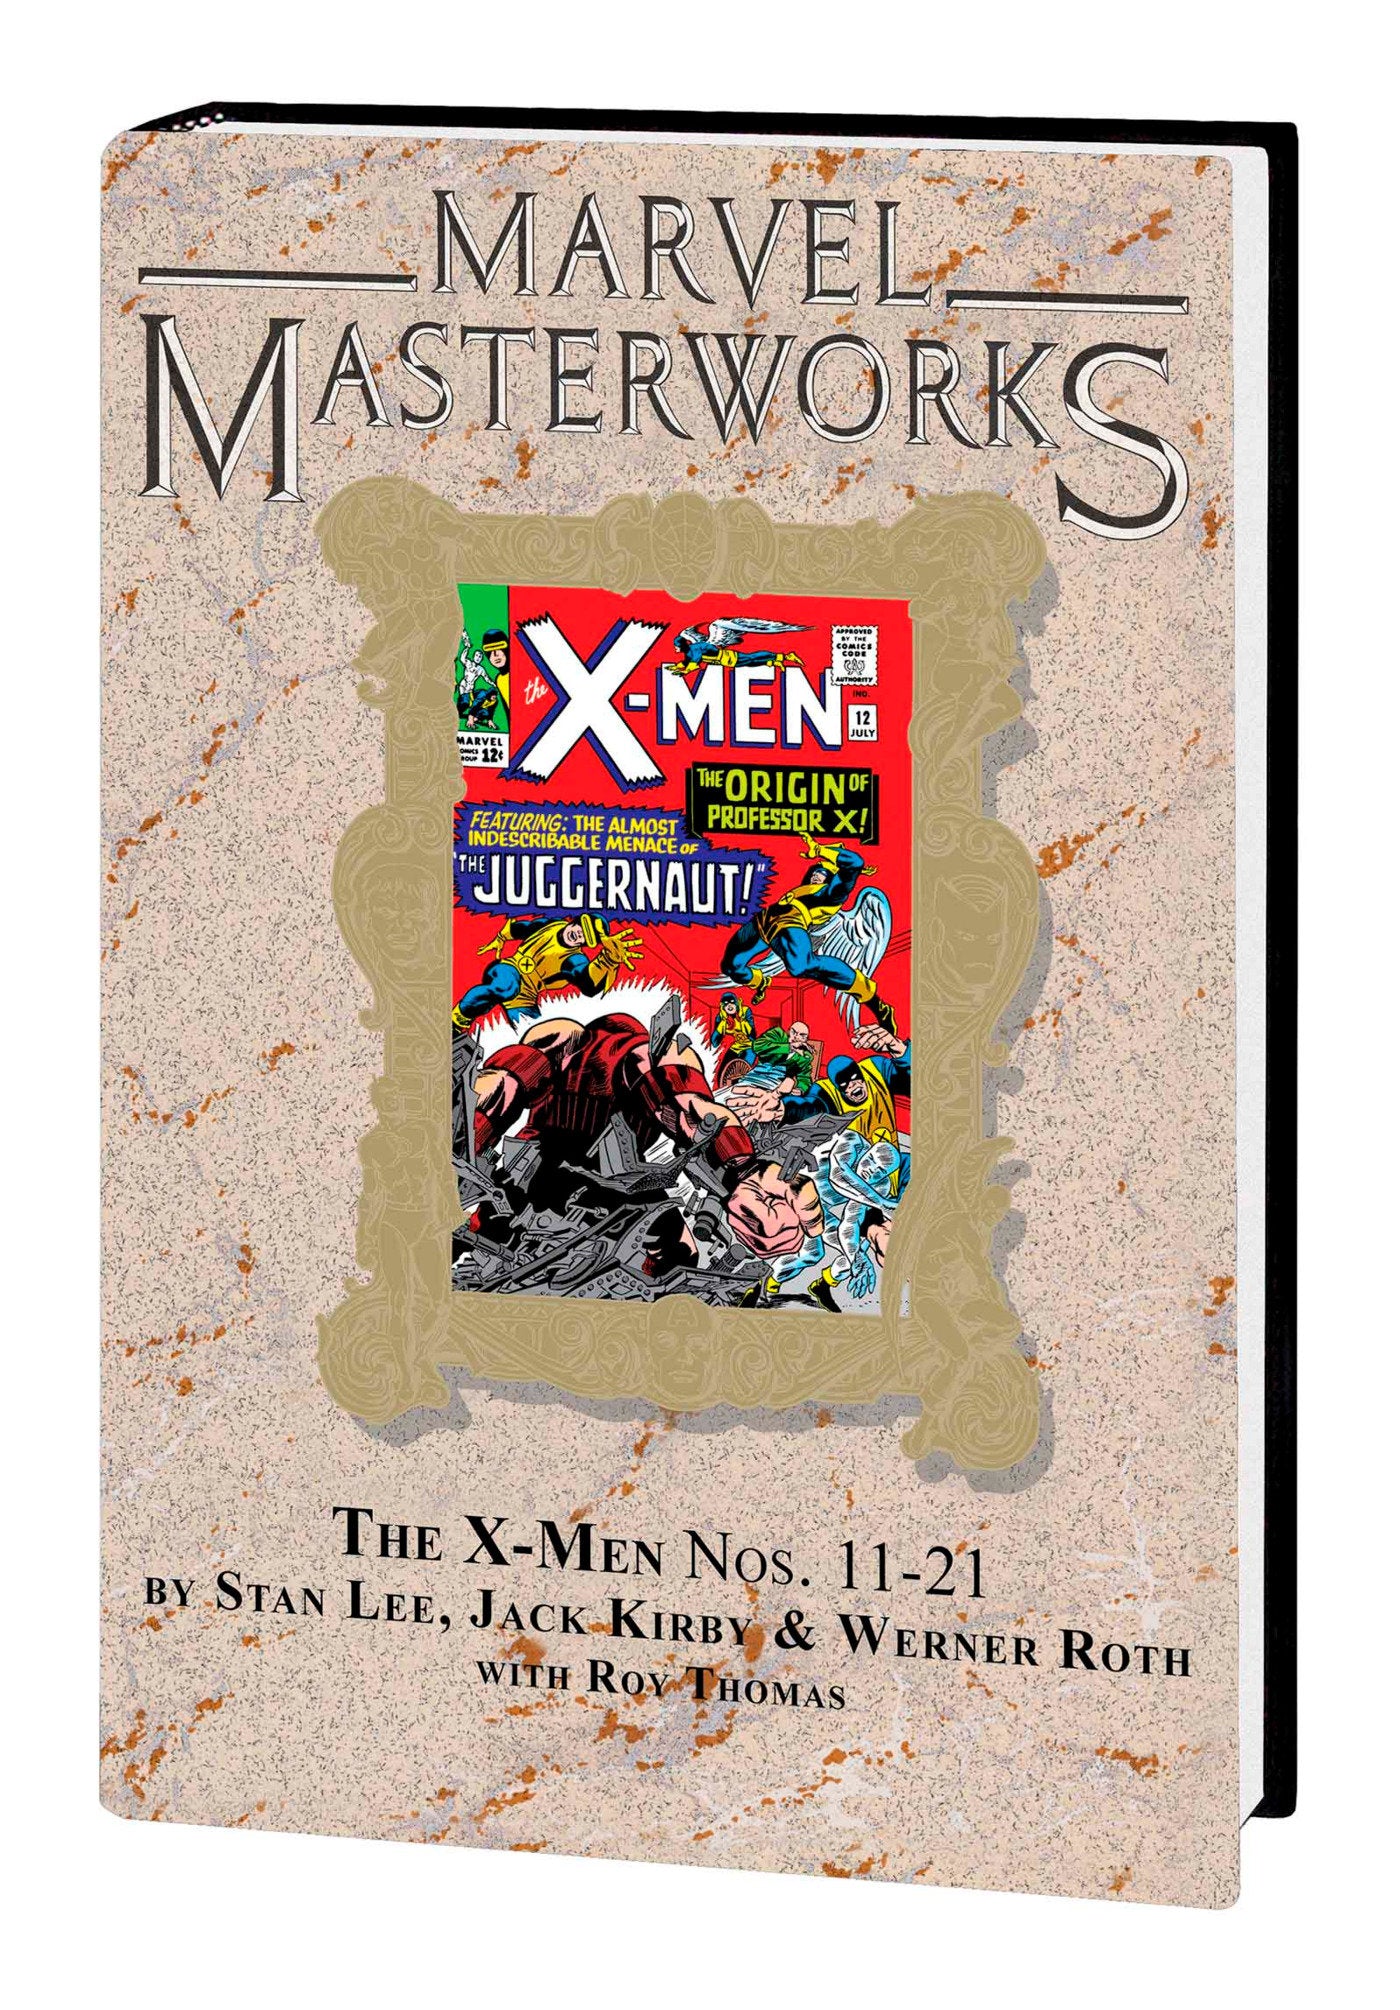 MARVEL MASTERWORKS: THE X-MEN VOL. 1 [DM ONLY]